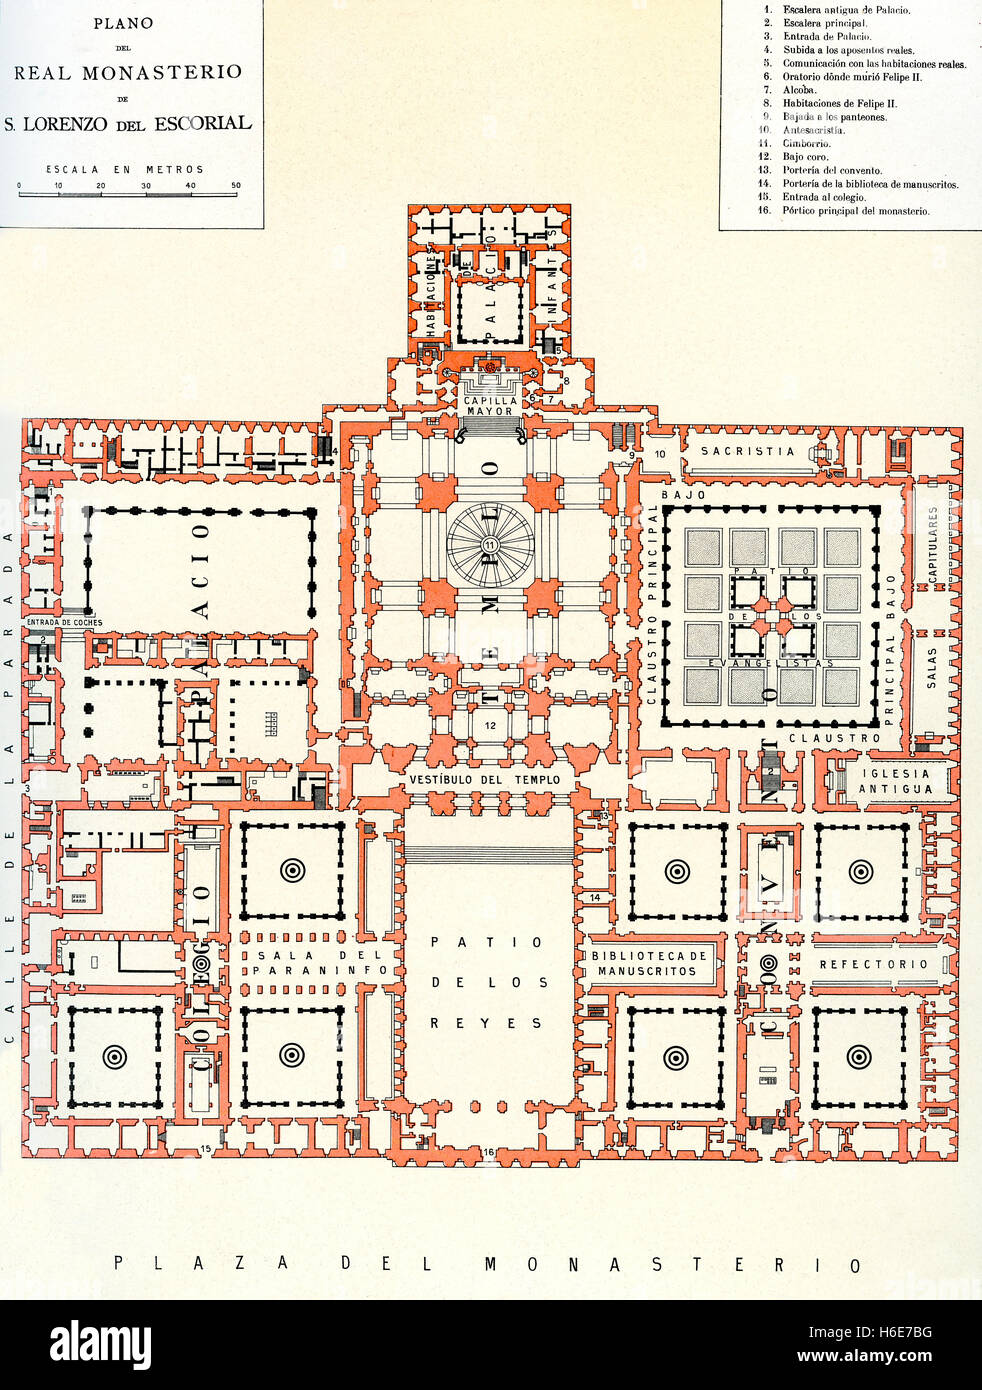 A plan of The Royal Site of San Lorenzo de El Escorial, Madrid, Spain, commonly known as El Escorial.  Monasterio de San Lorenzo de El Escorial. Stock Photo